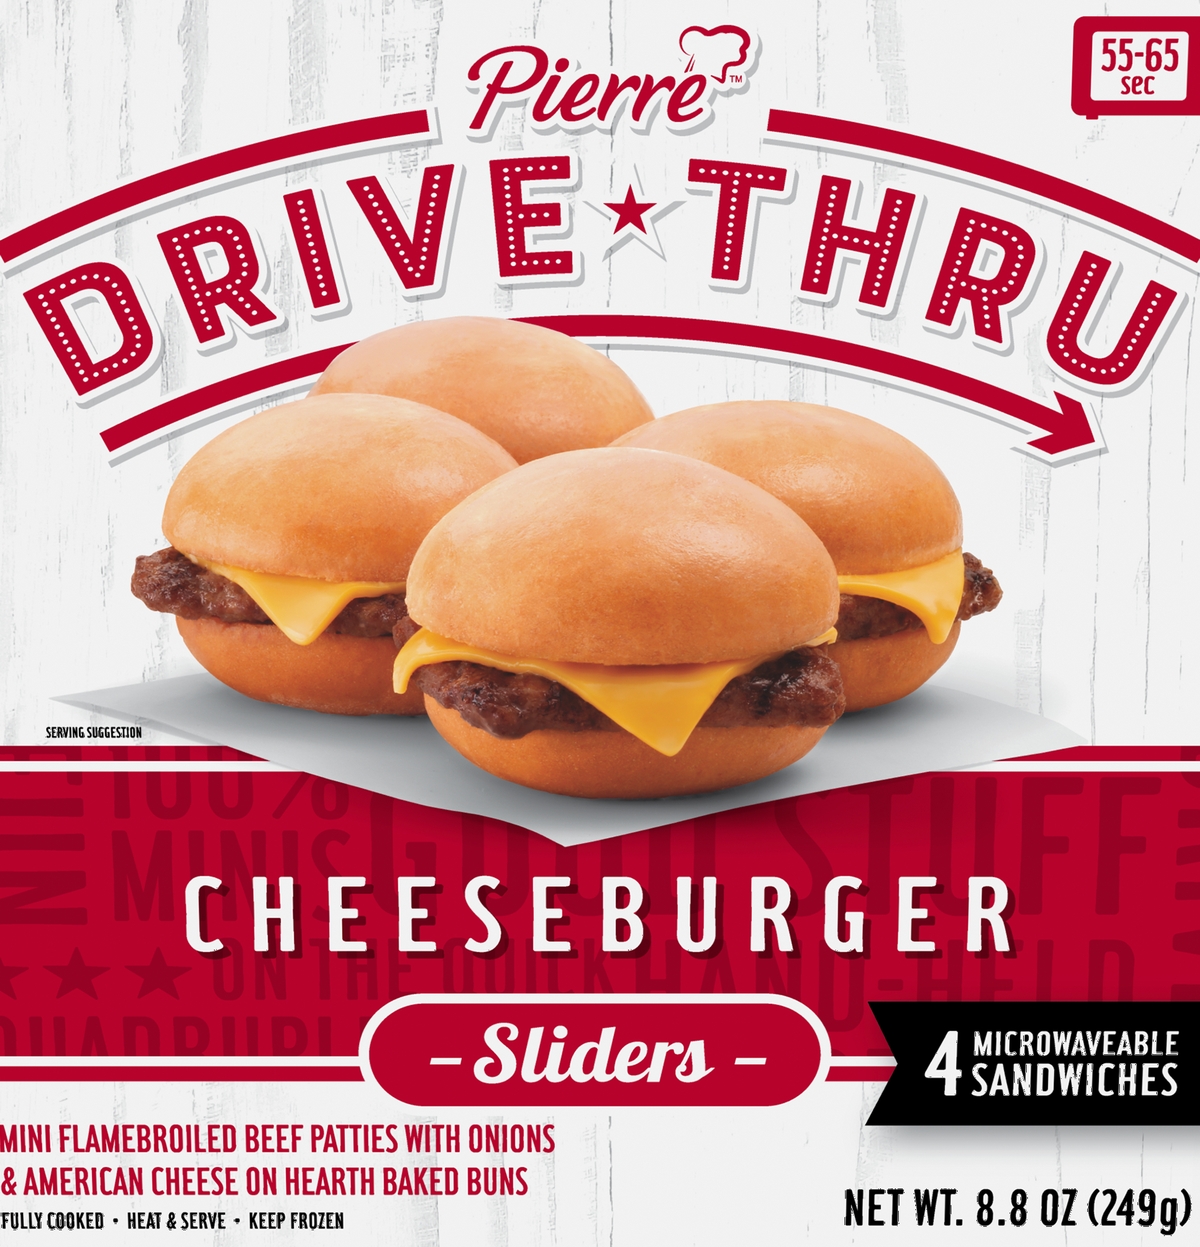 Pierre Drive Thru Cheeseburger Sliders